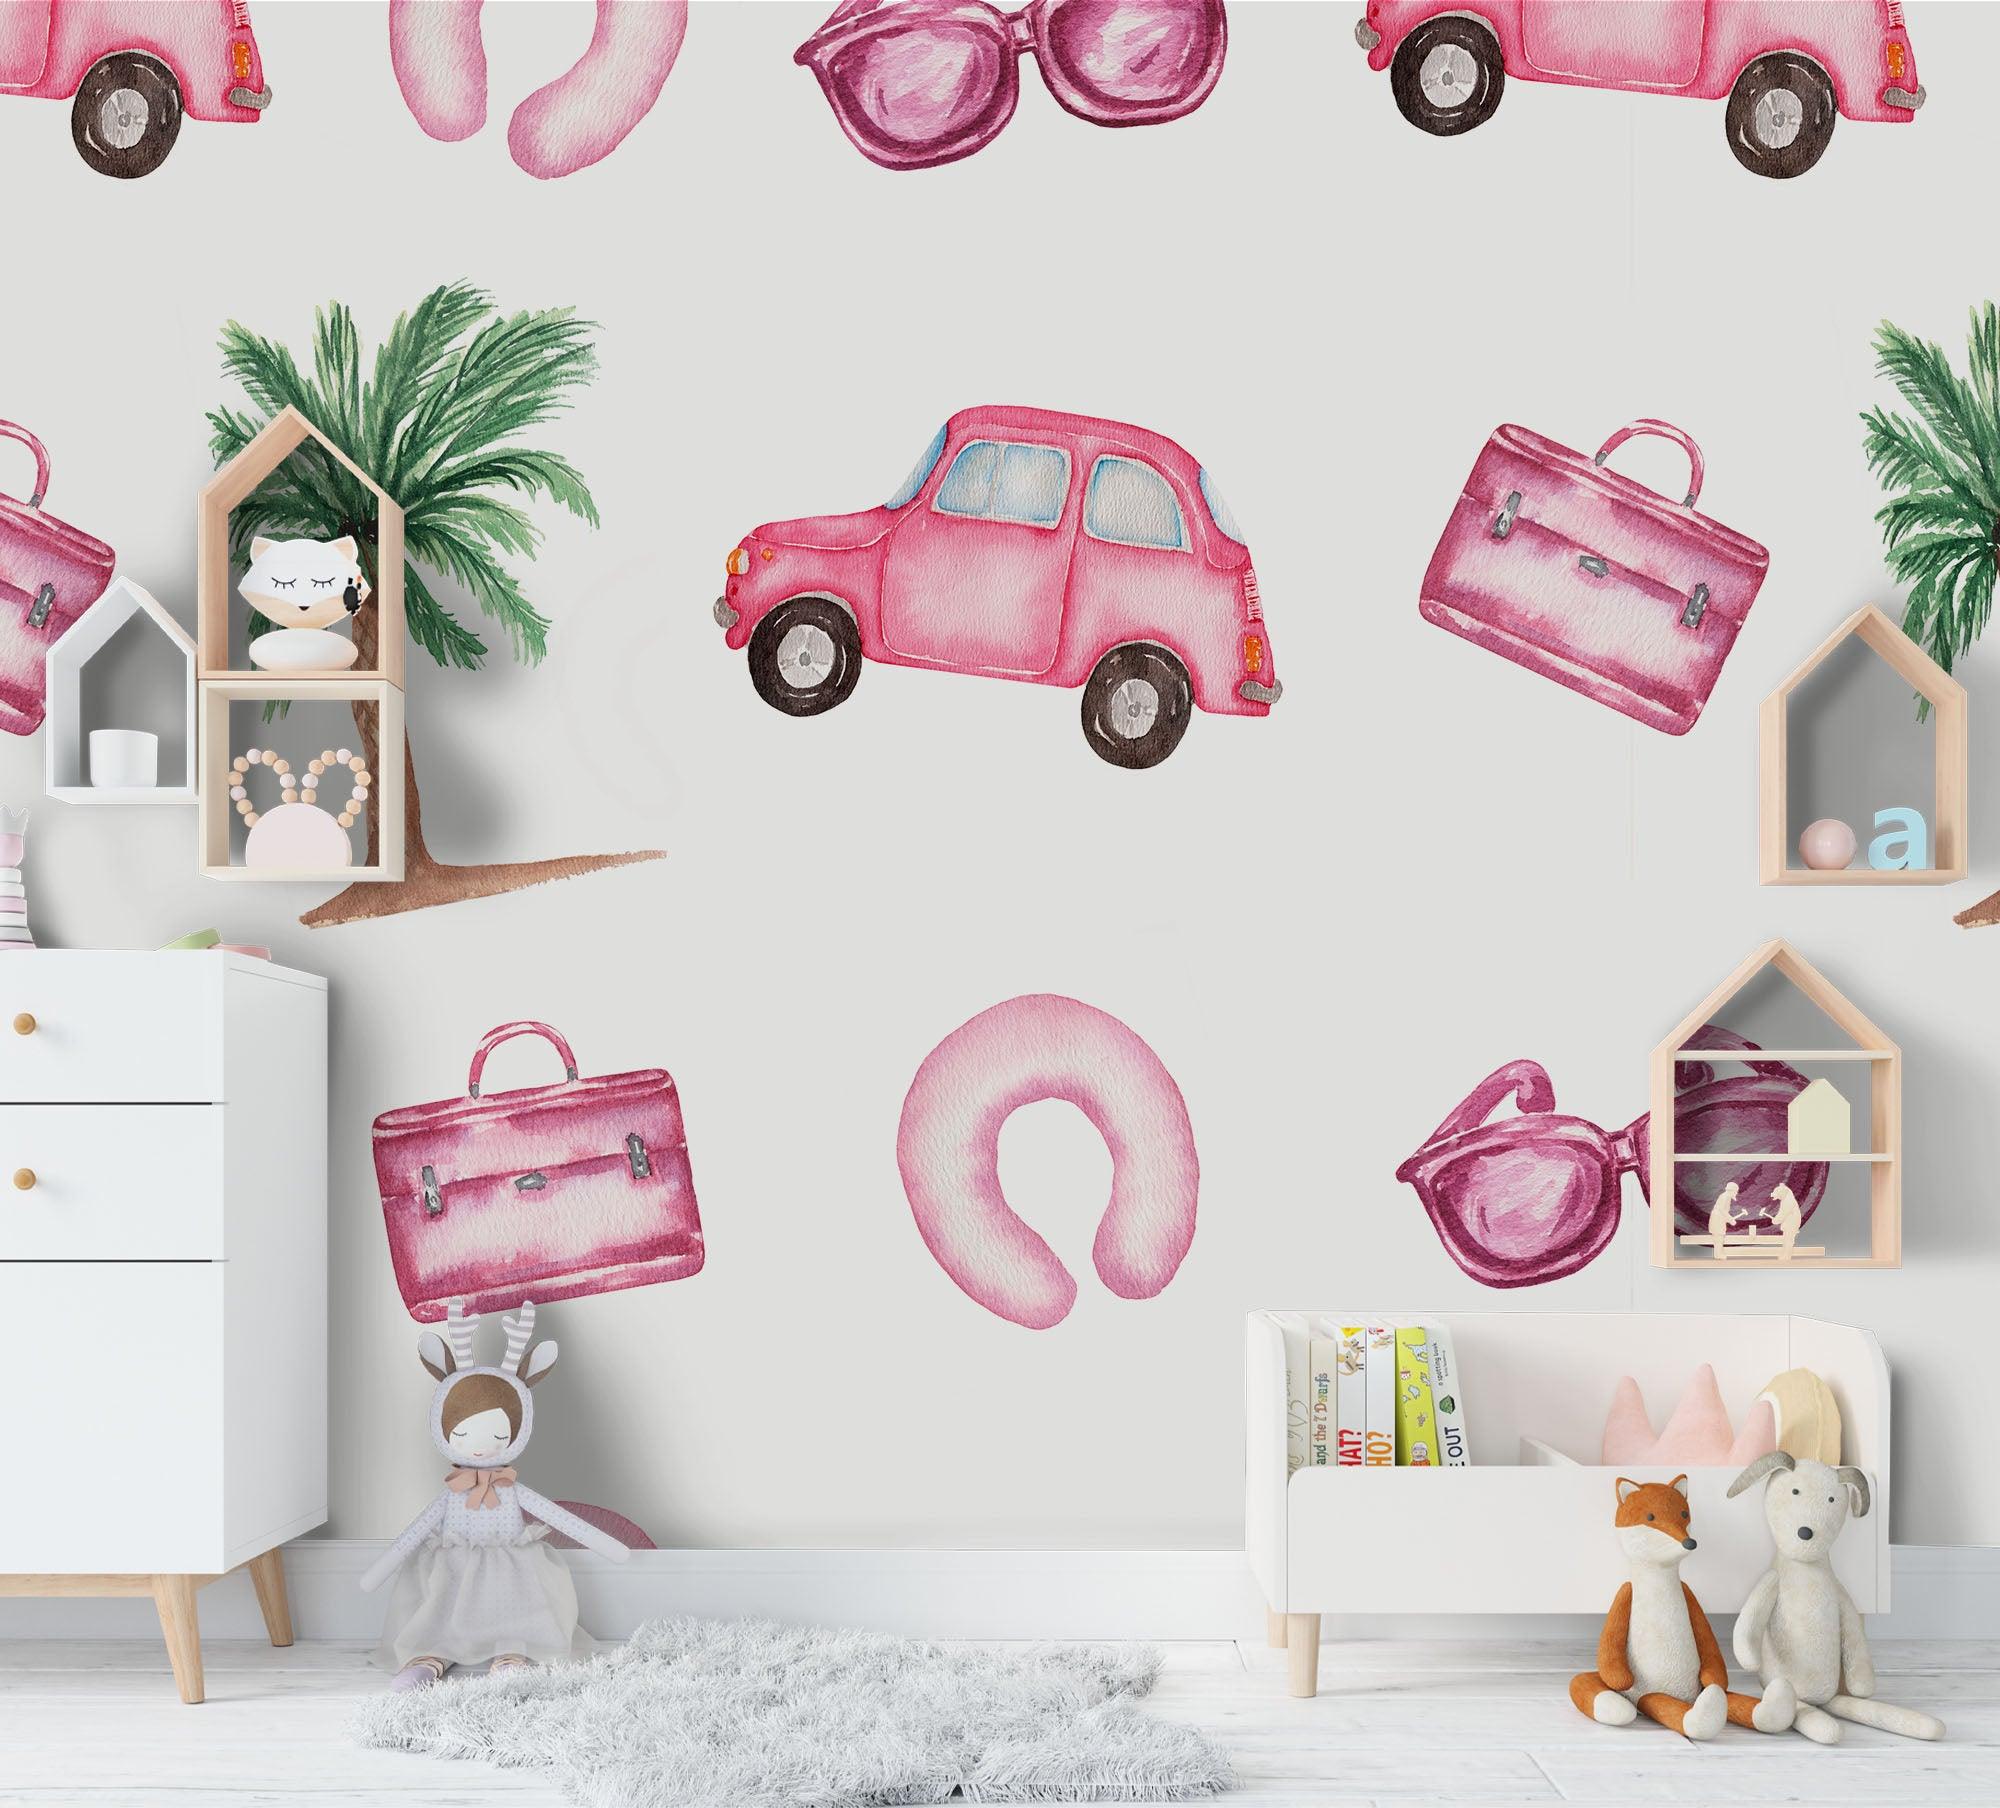 3D Cartoon Pink Car Coconut Tree Wall Mural Wallpaper 110- Jess Art Decoration